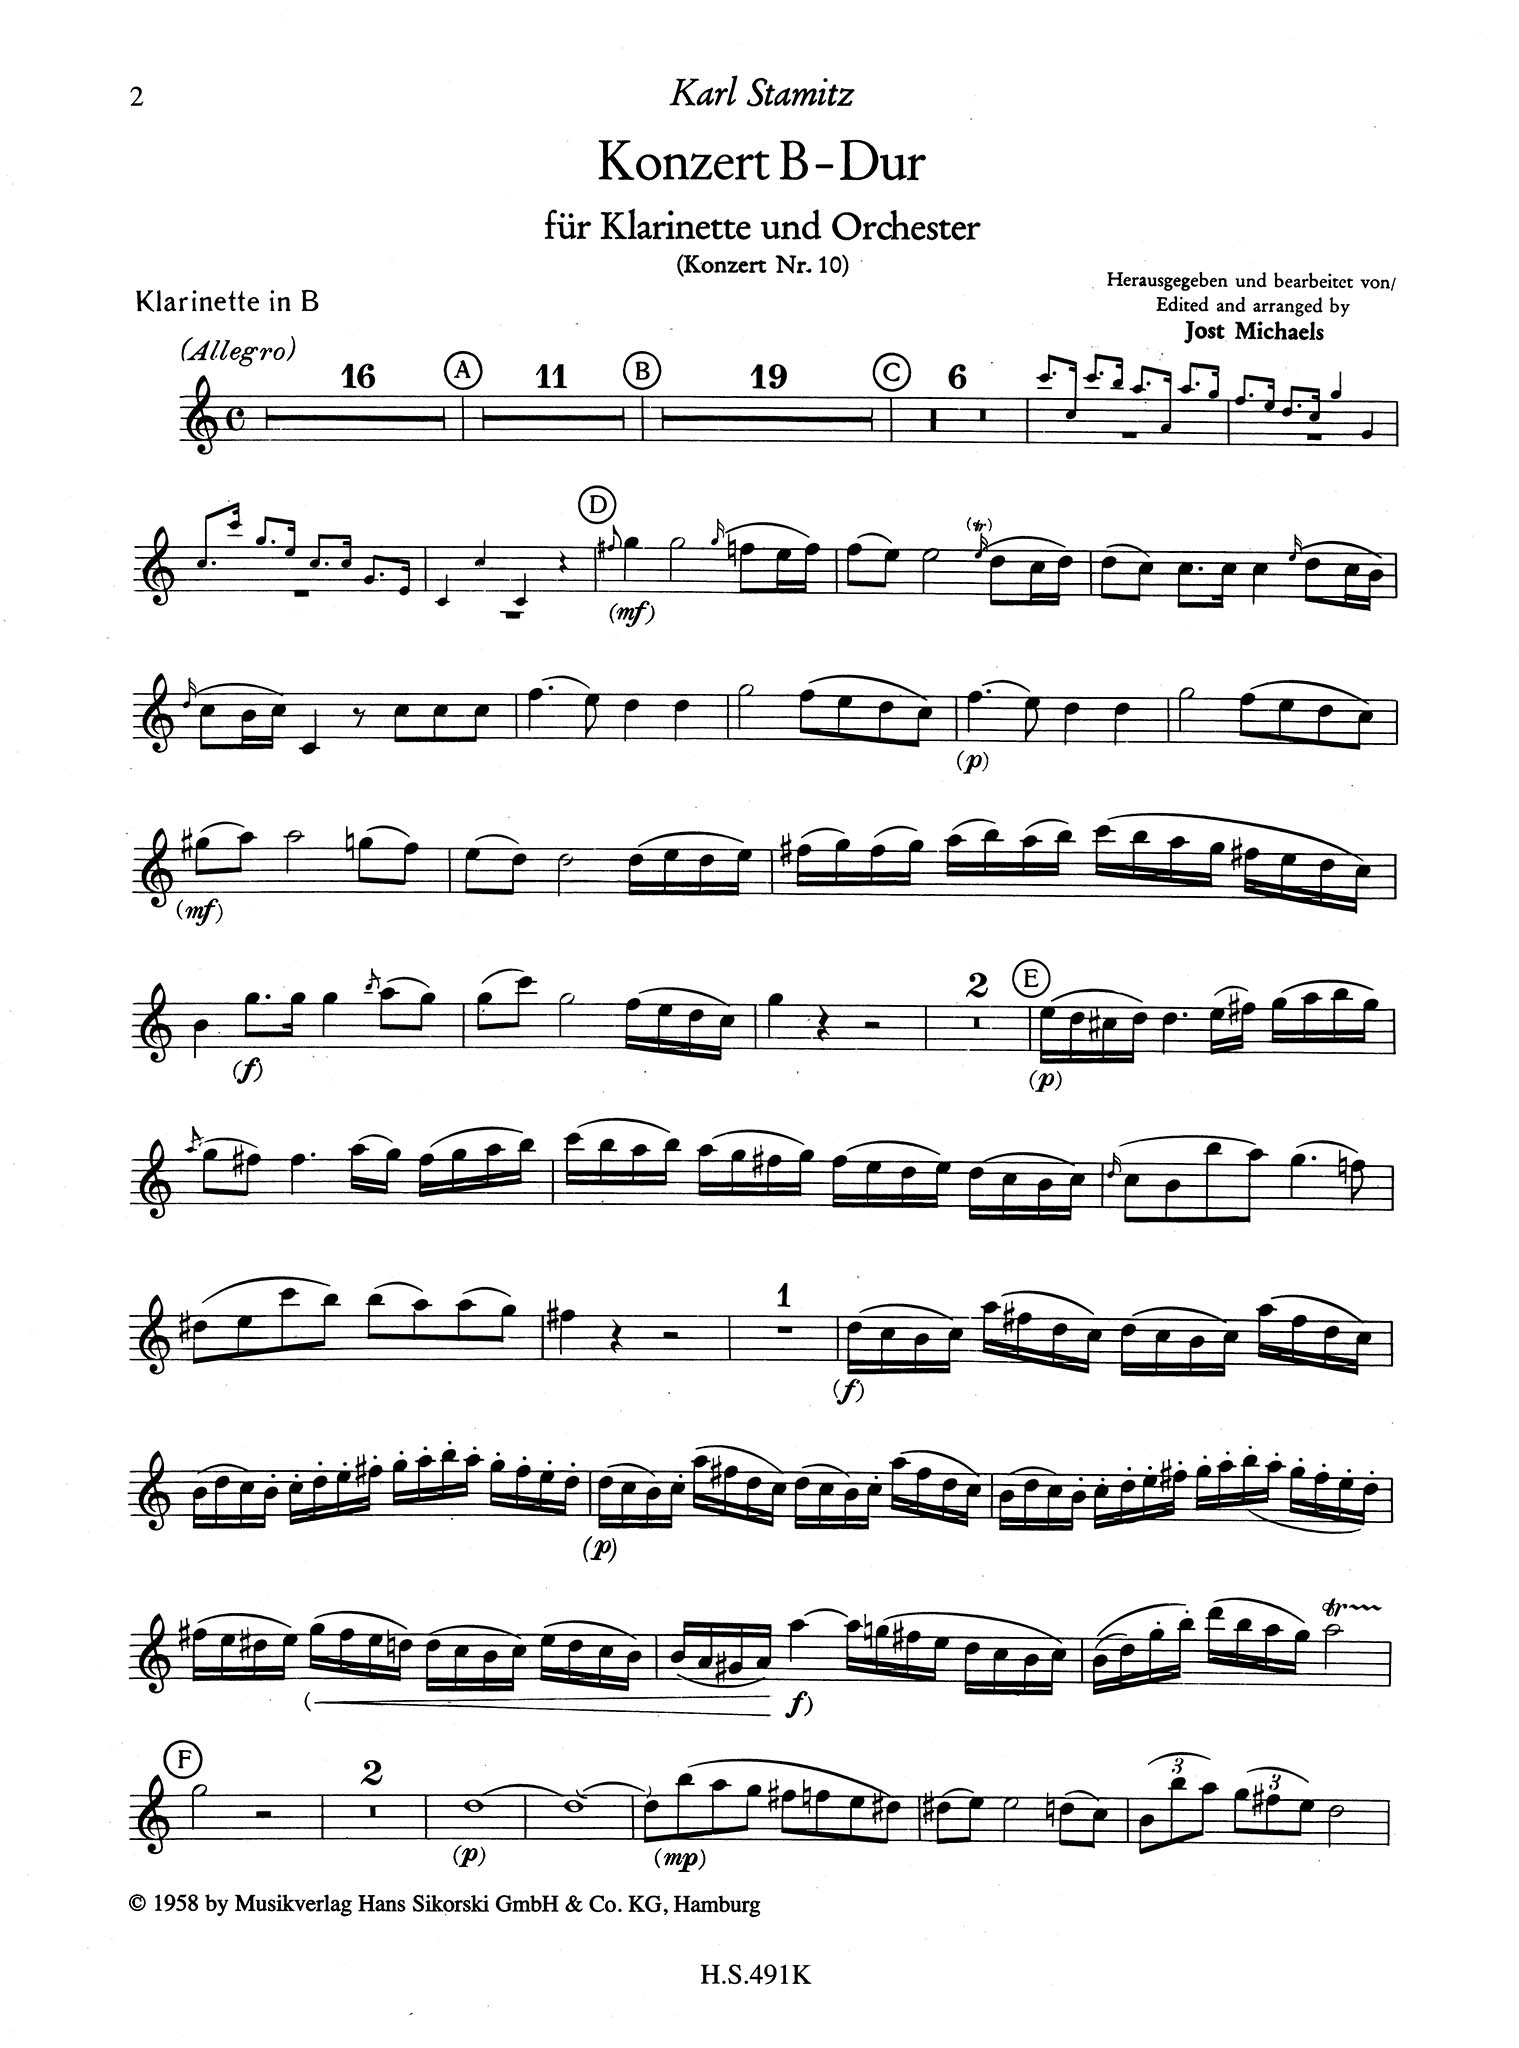 Clarinet Concerto in B-flat Major Clarinet part